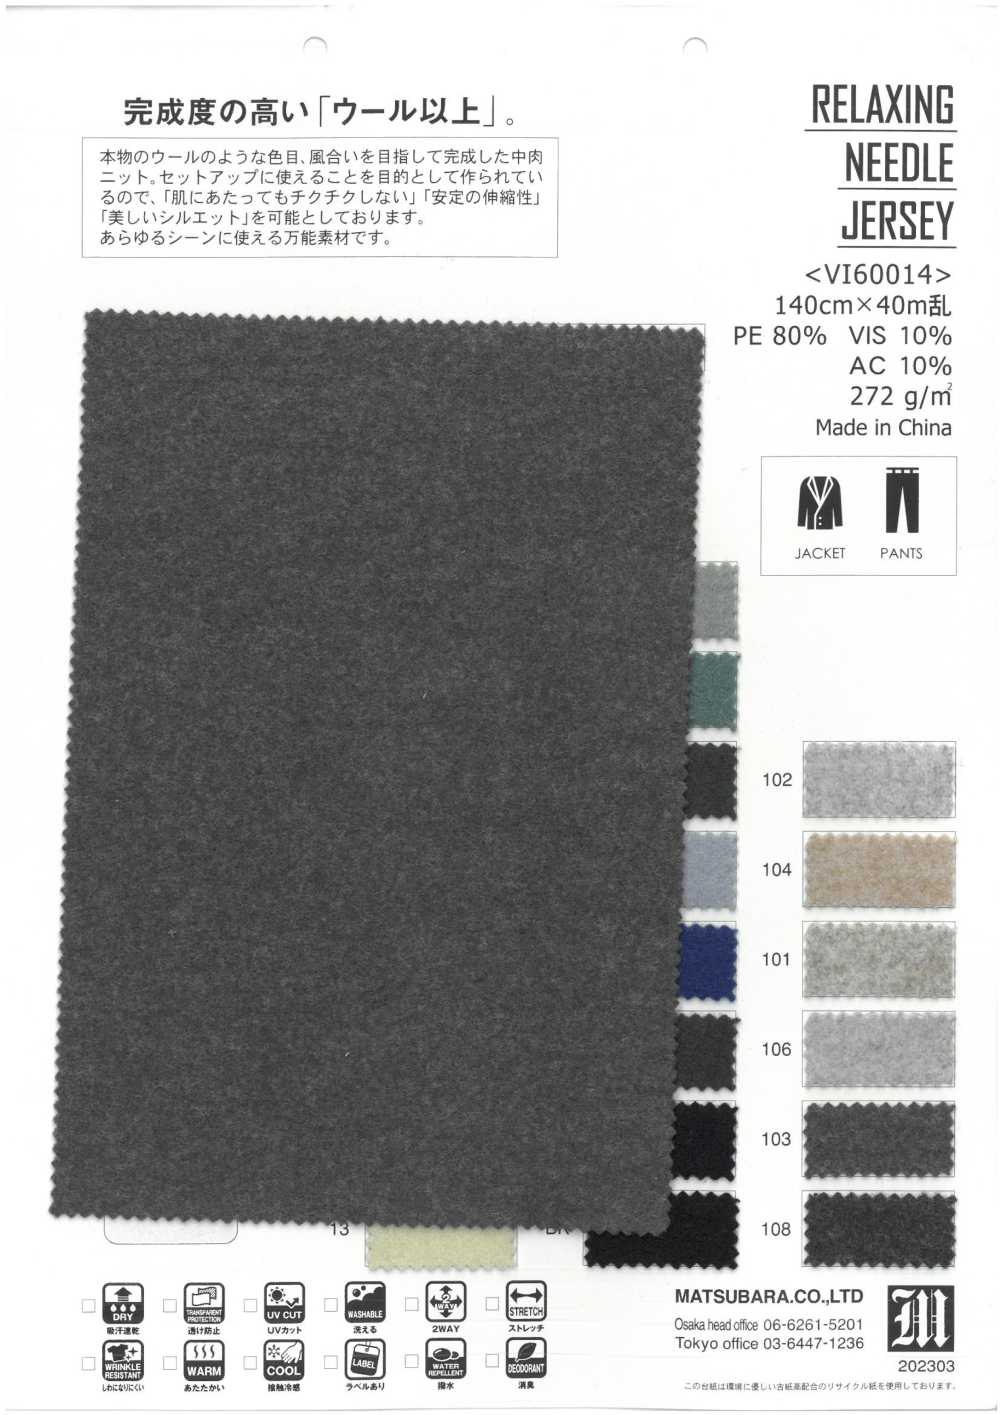 VI60014 JERSEY DE AGUJA RELAJANTE[Fabrica Textil] Matsubara